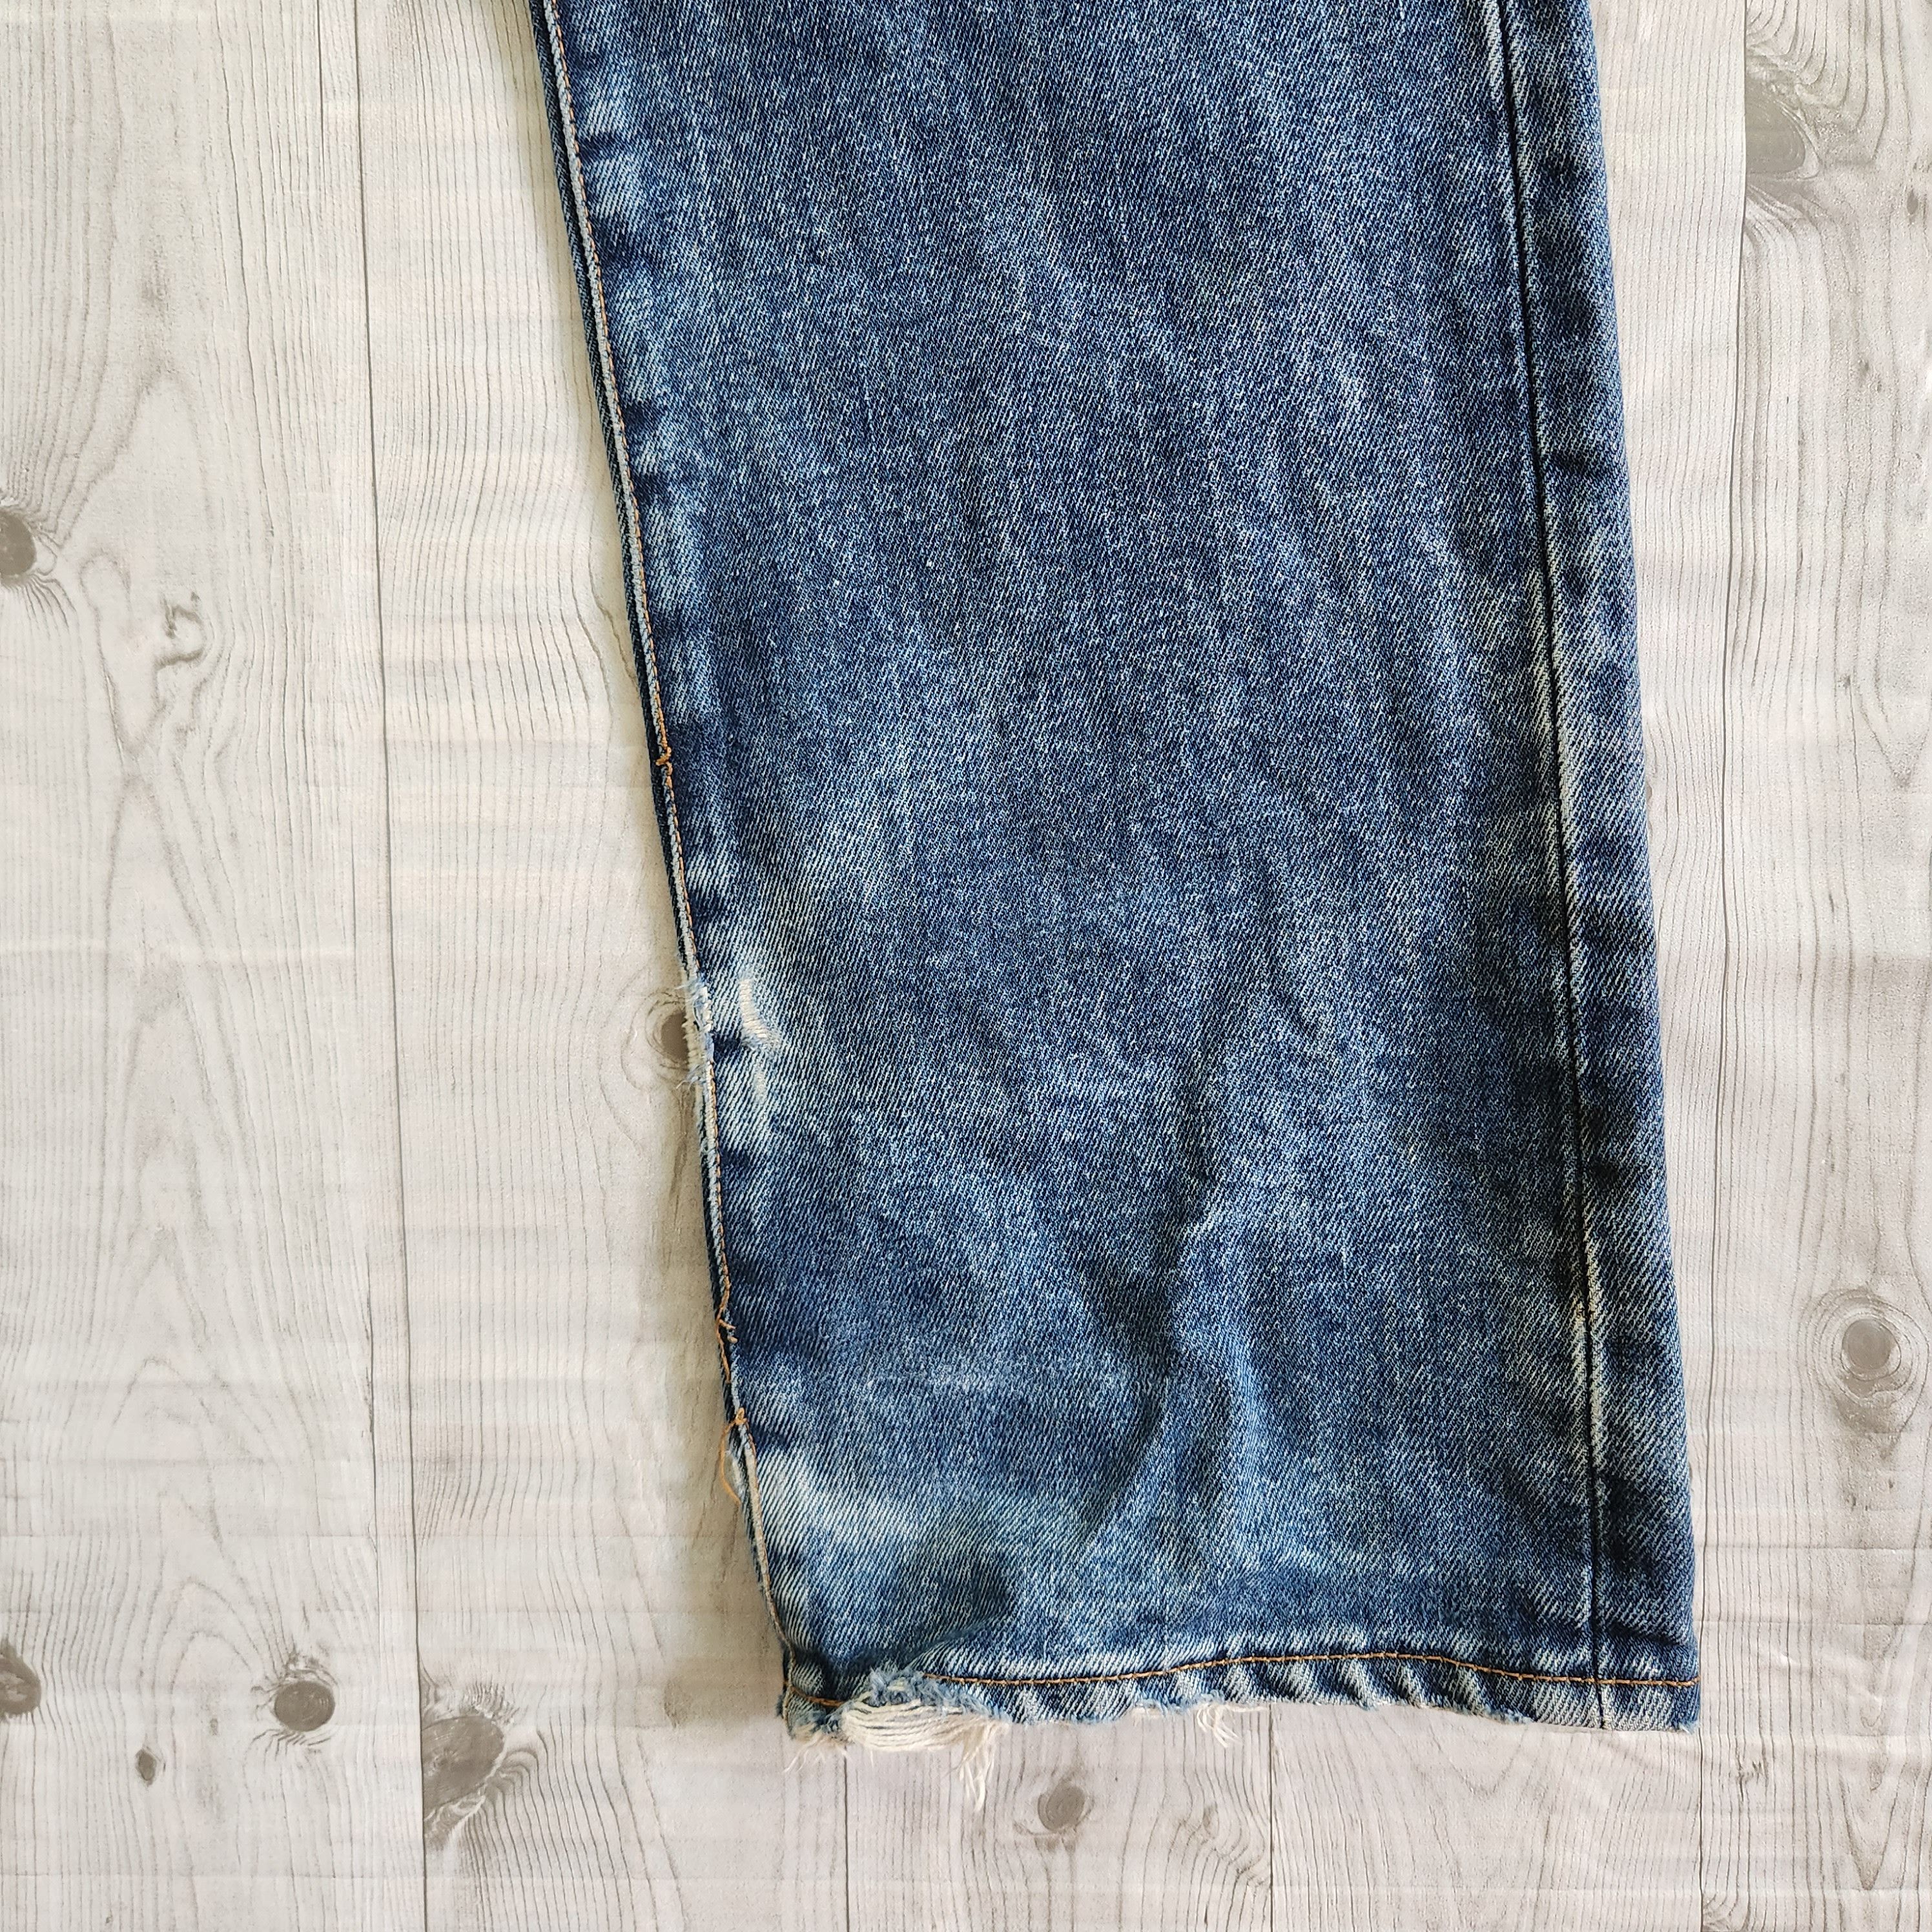 Japan Blue - Kojima Genes Japan Vintage Denim Blue Jeans Ripped - 14